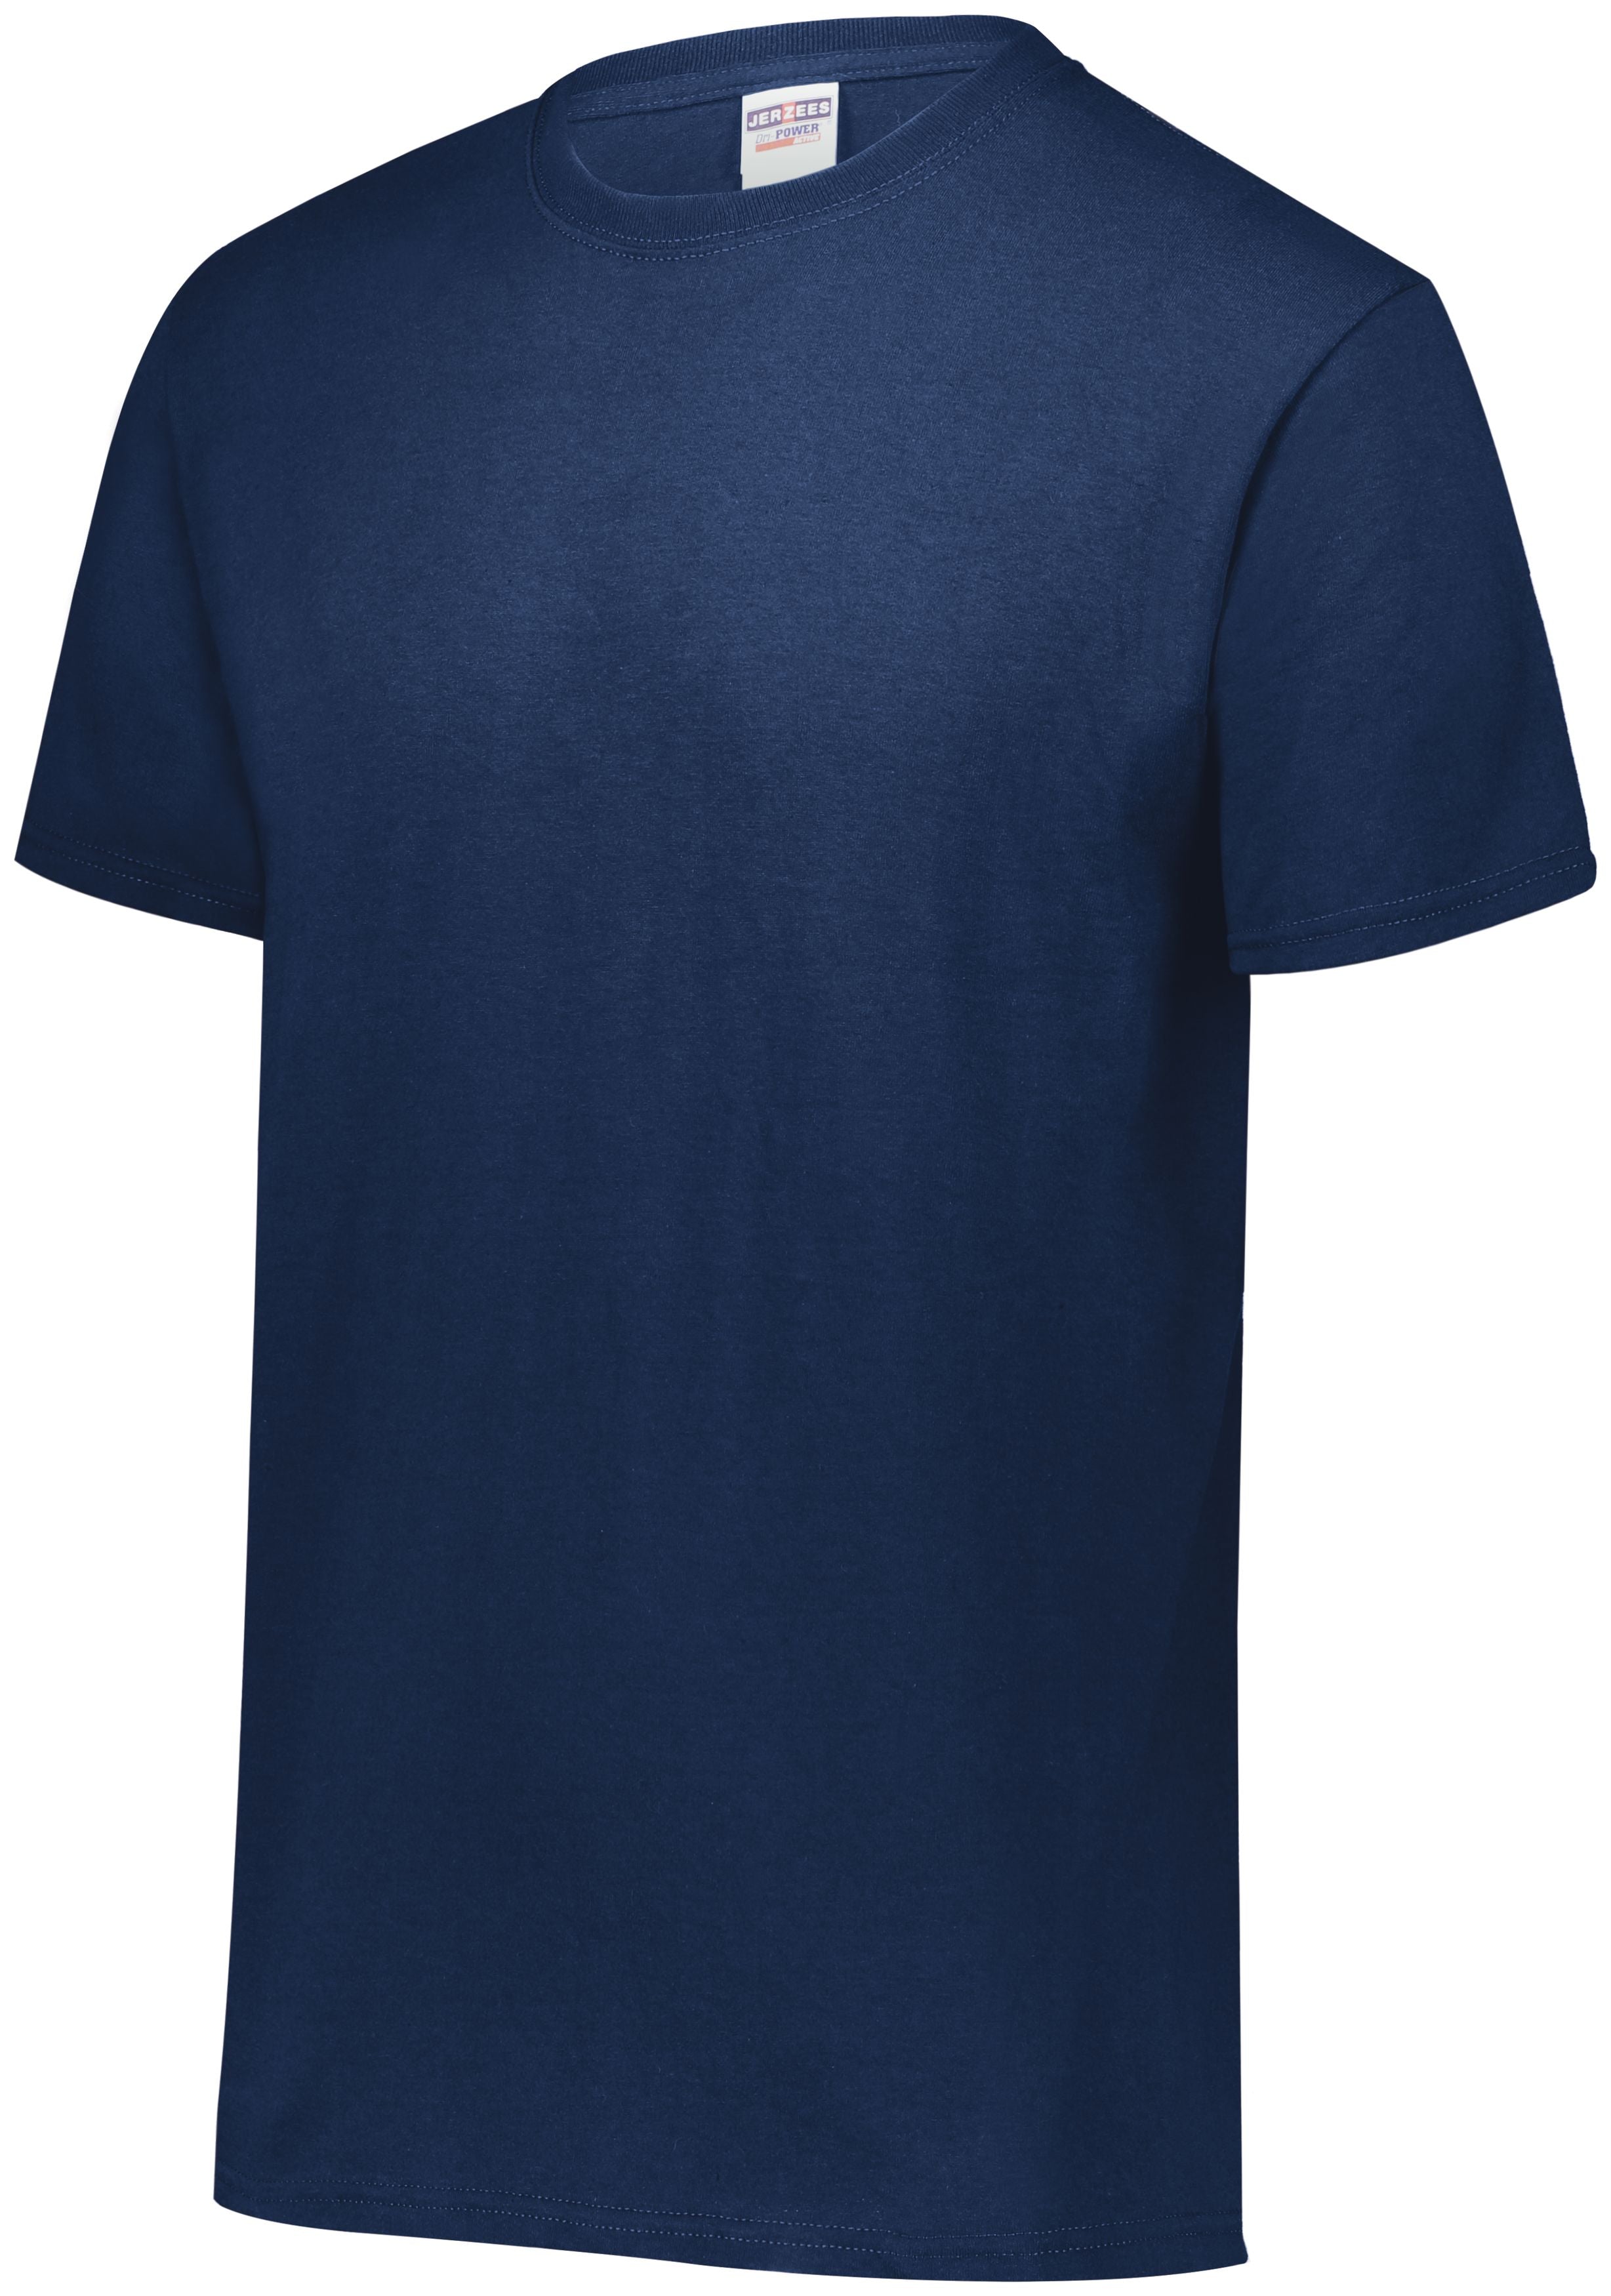 Russell Athletic Dri-power® T-shirt